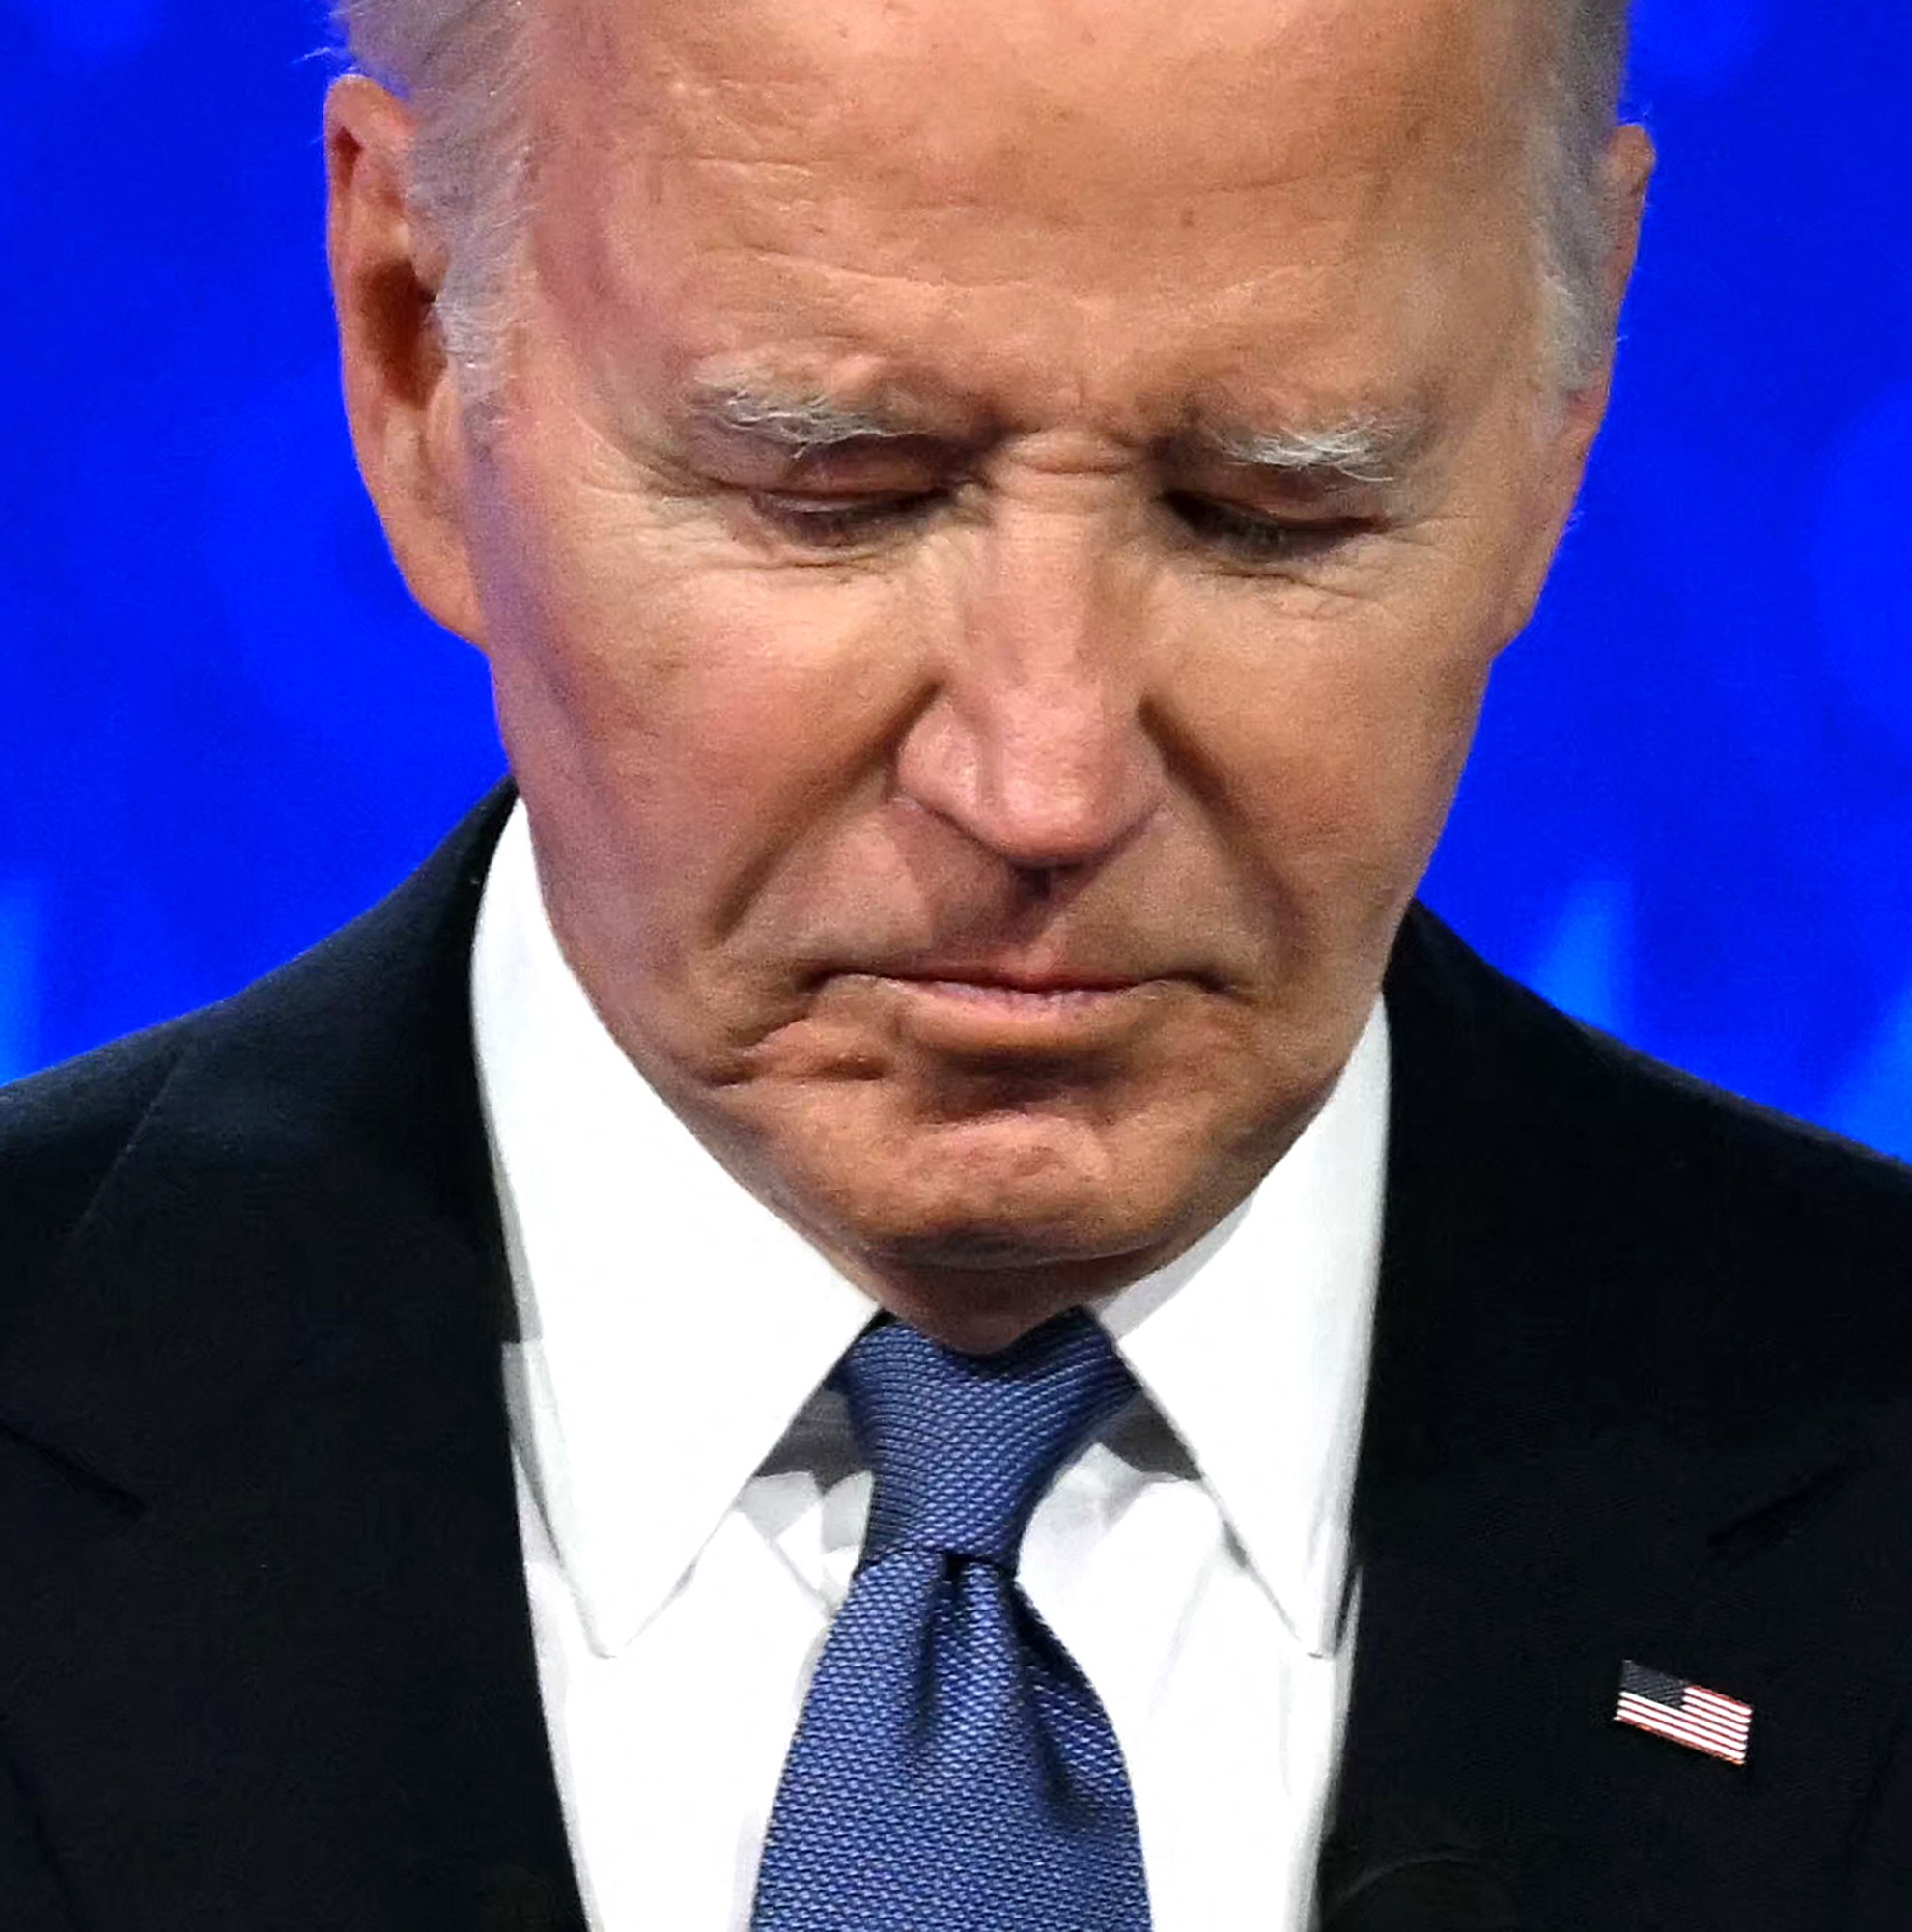 The silver lining to Biden’s debate disaster